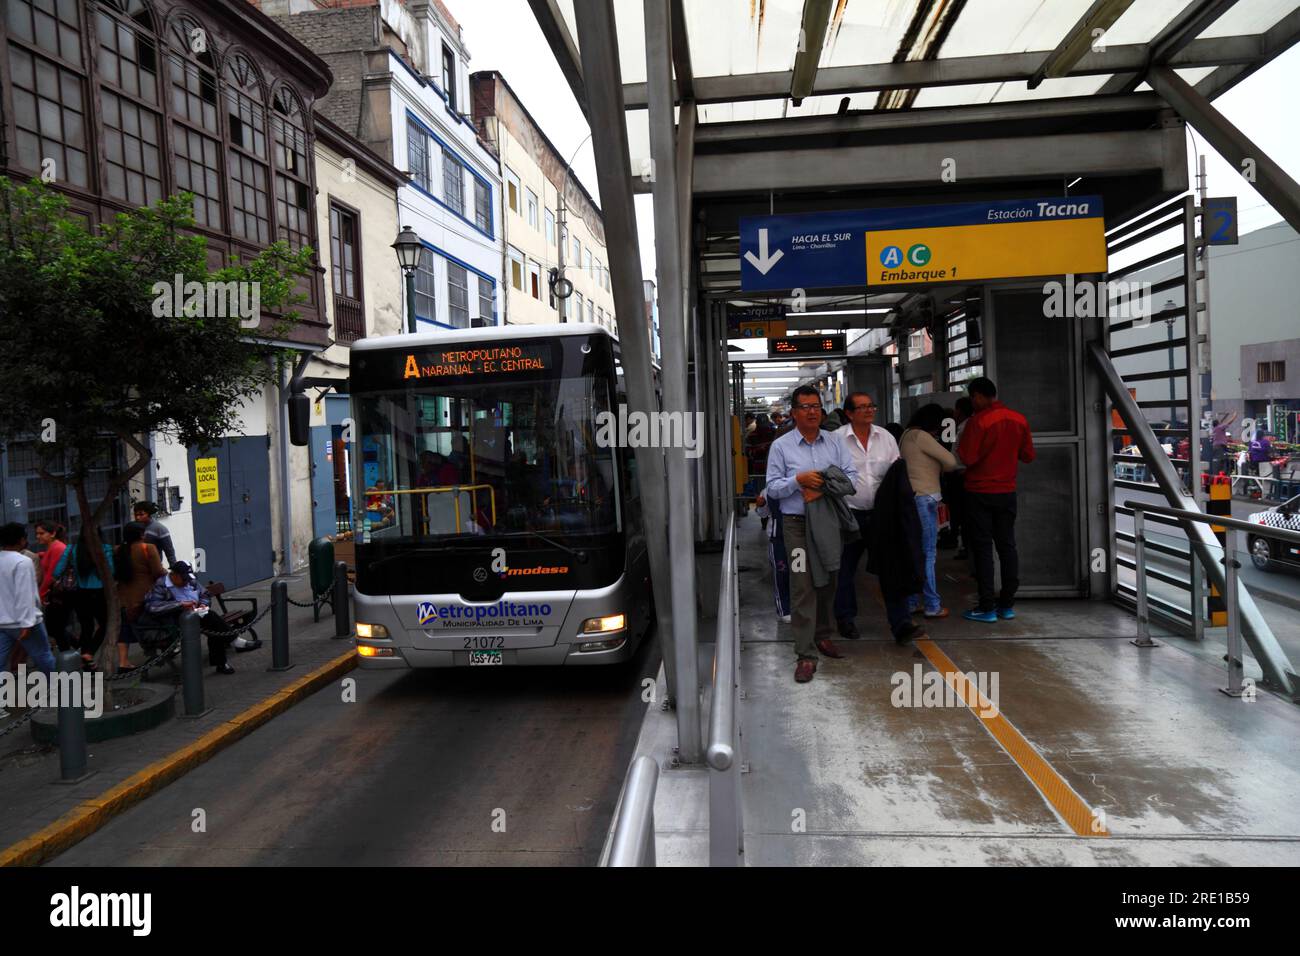 El Metropolitano A Line public bus at Estacion Tacna on Av Emancipación in central Lima, Peru Stock Photo